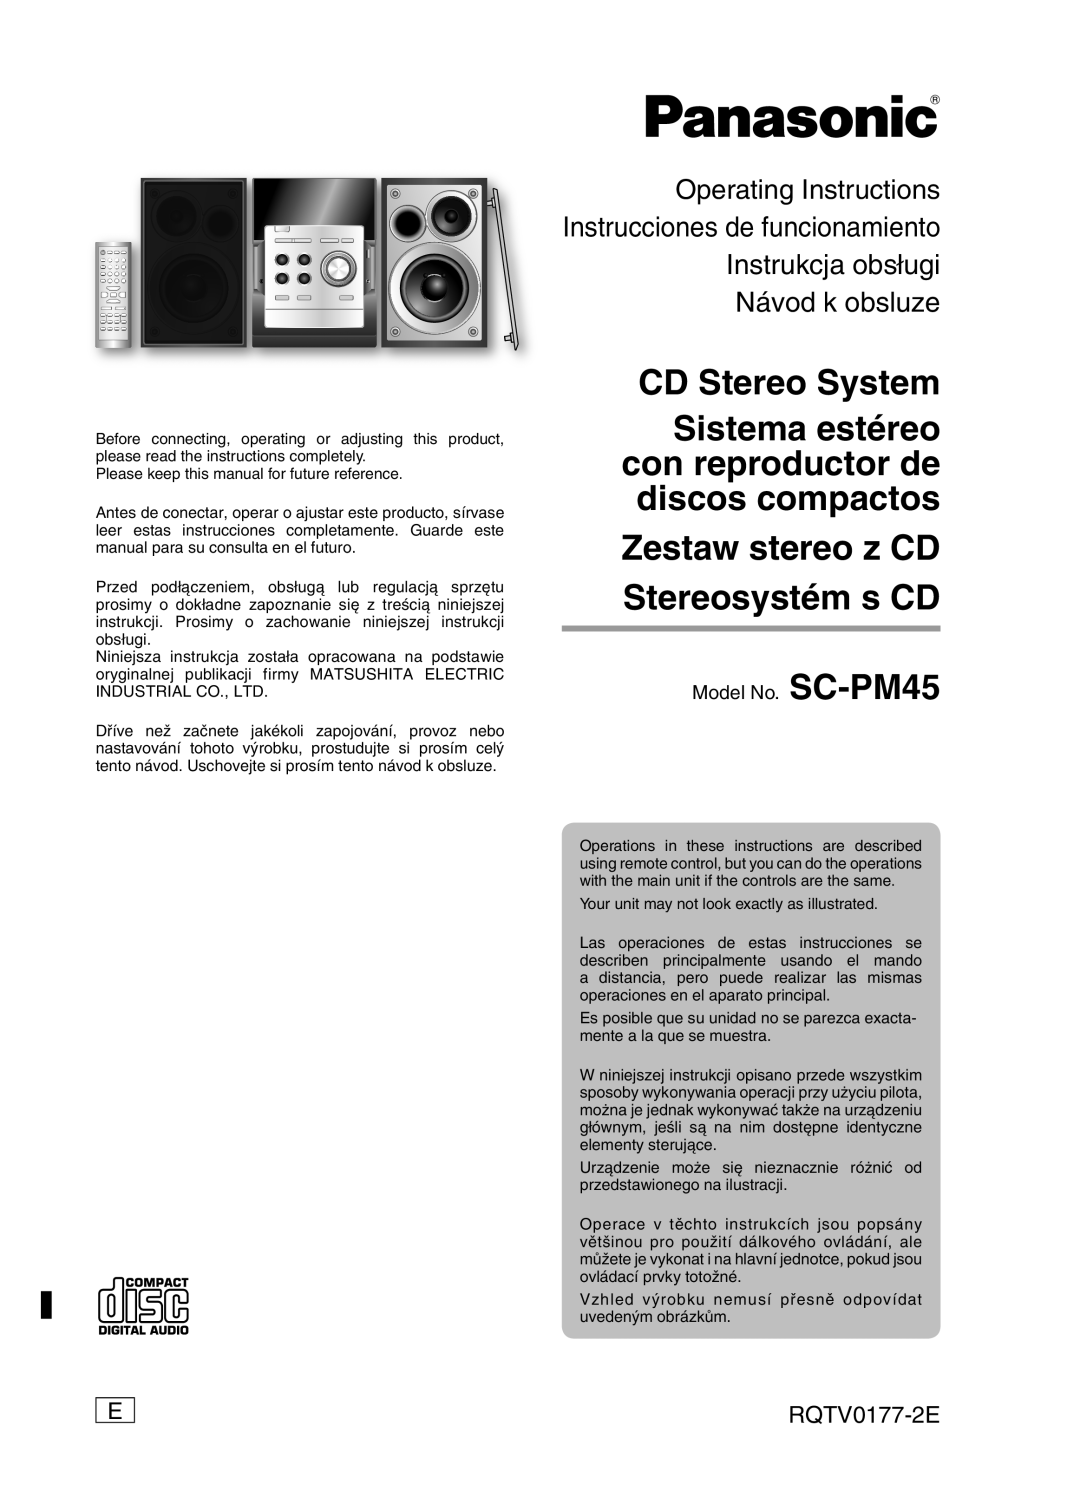 Panasonic manual RQTV0177-2E, Model No. SC-PM45, CD Stereo System, Zestaw stereo z CD Stereosystém s CD 